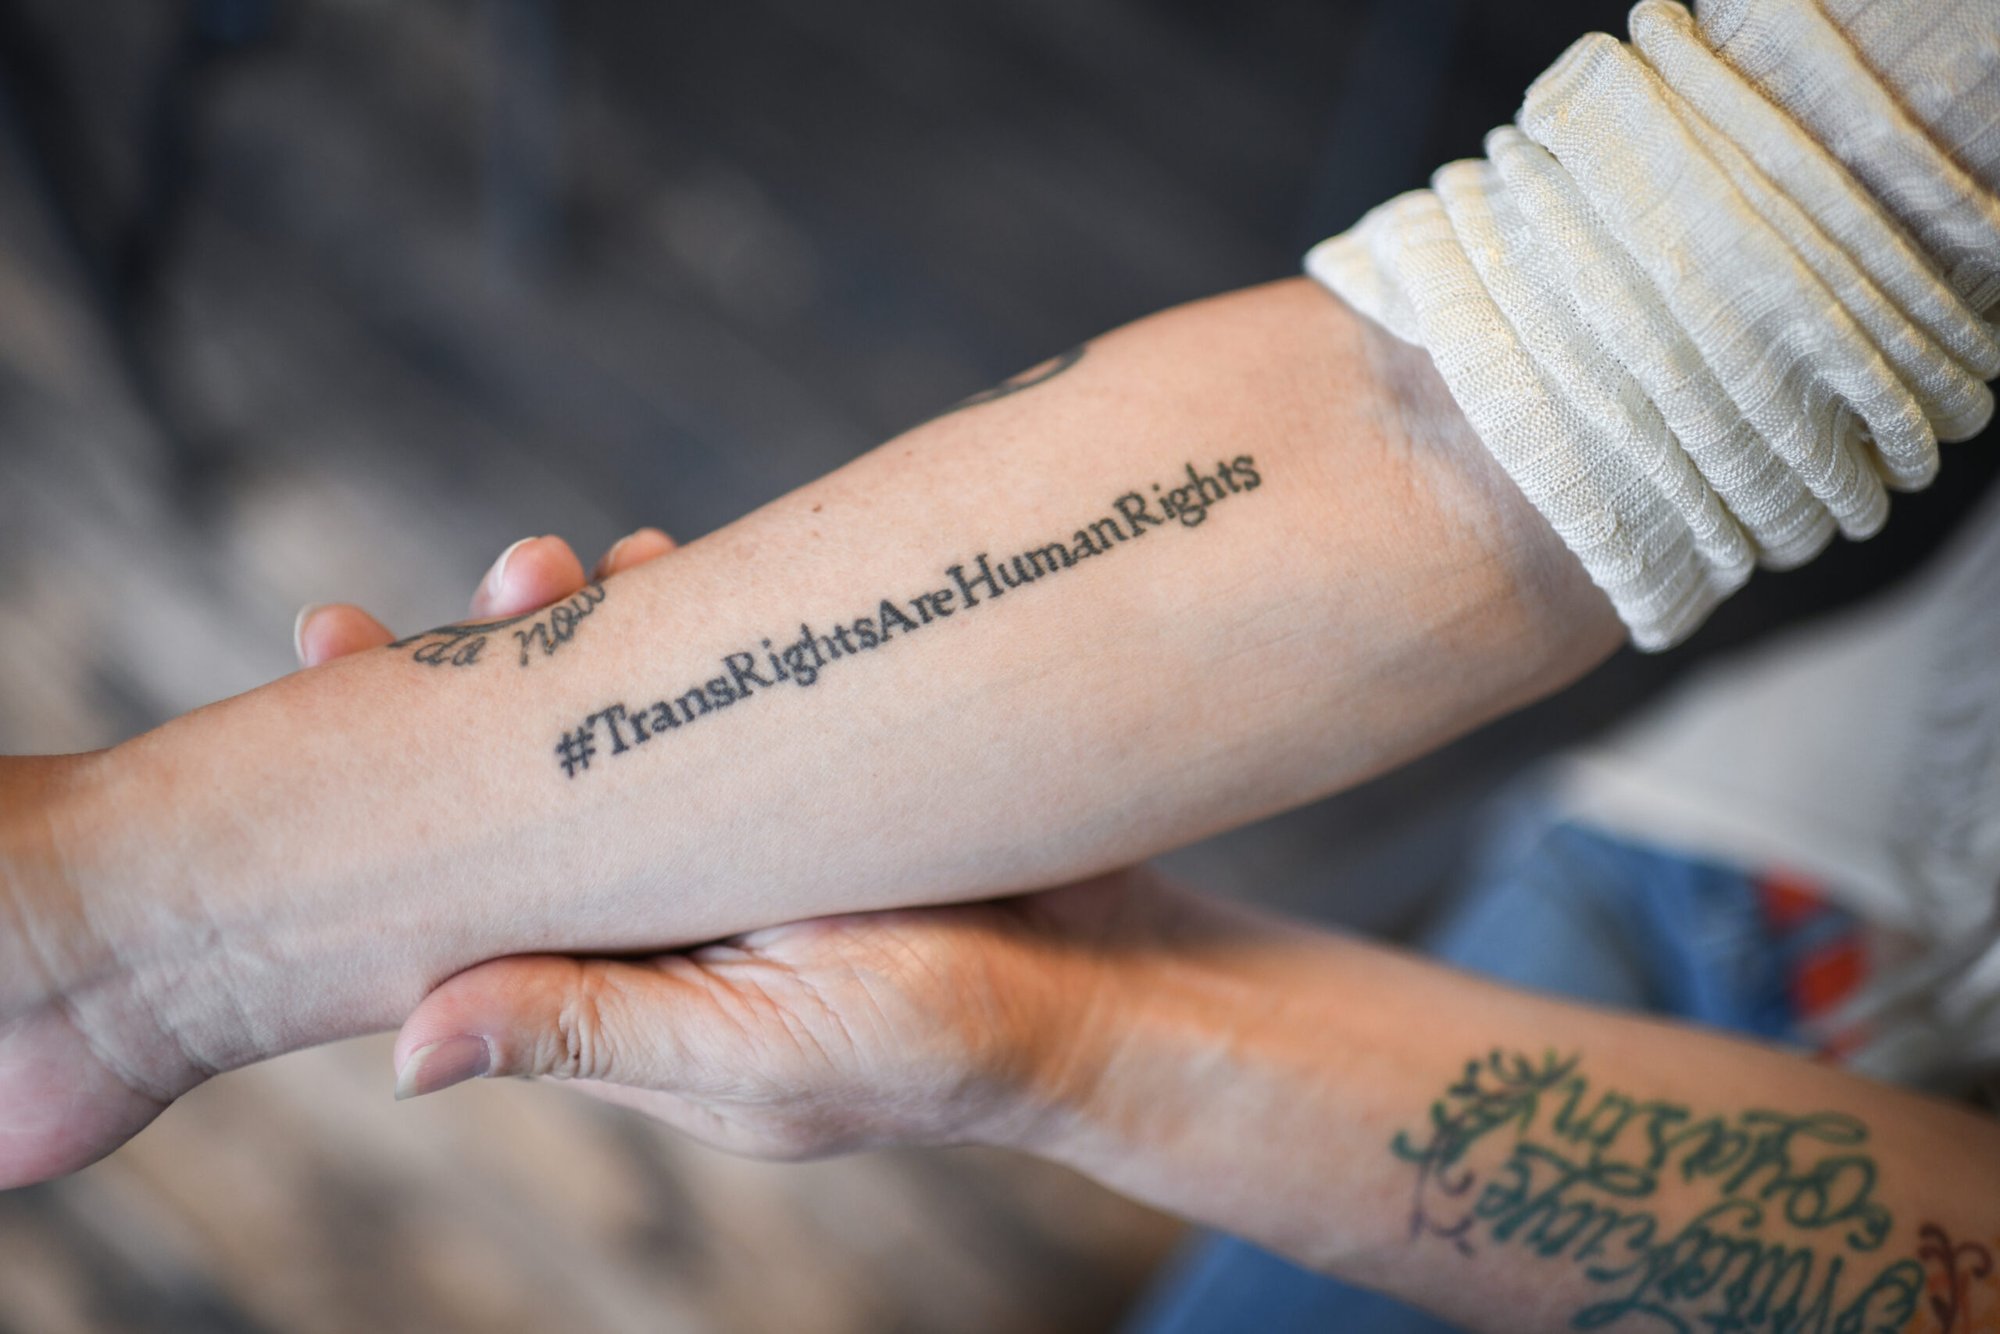 Woman’s arm with a tattoo #TransRightsAreHumanRights.